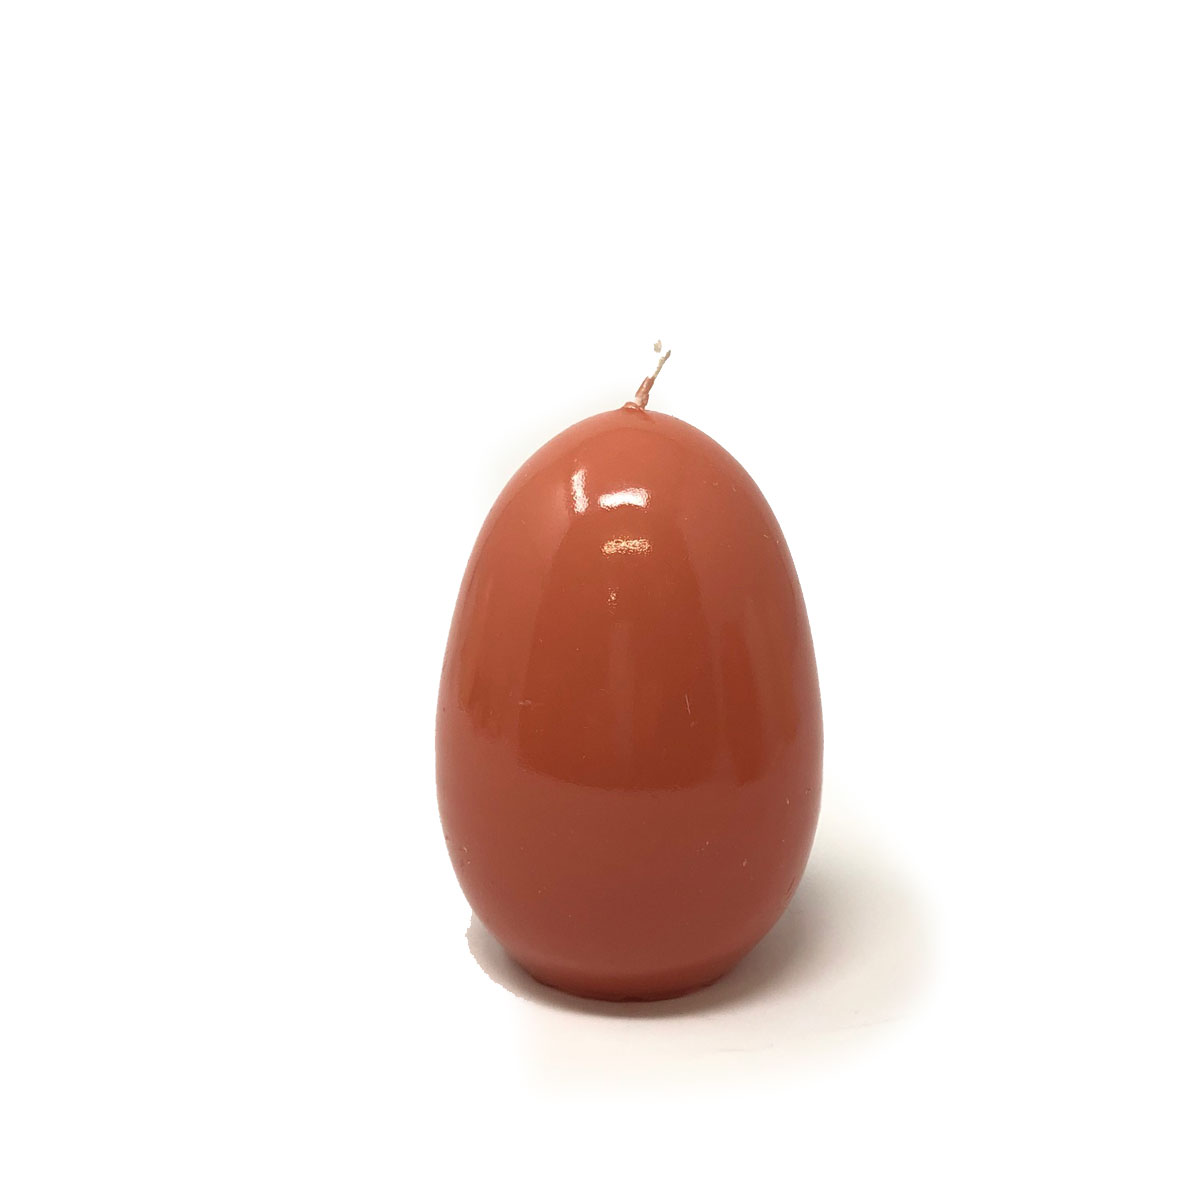 Engels Kerzen Eierkerze gelackt, Höhe ca. 8 cm, Frabe: terra